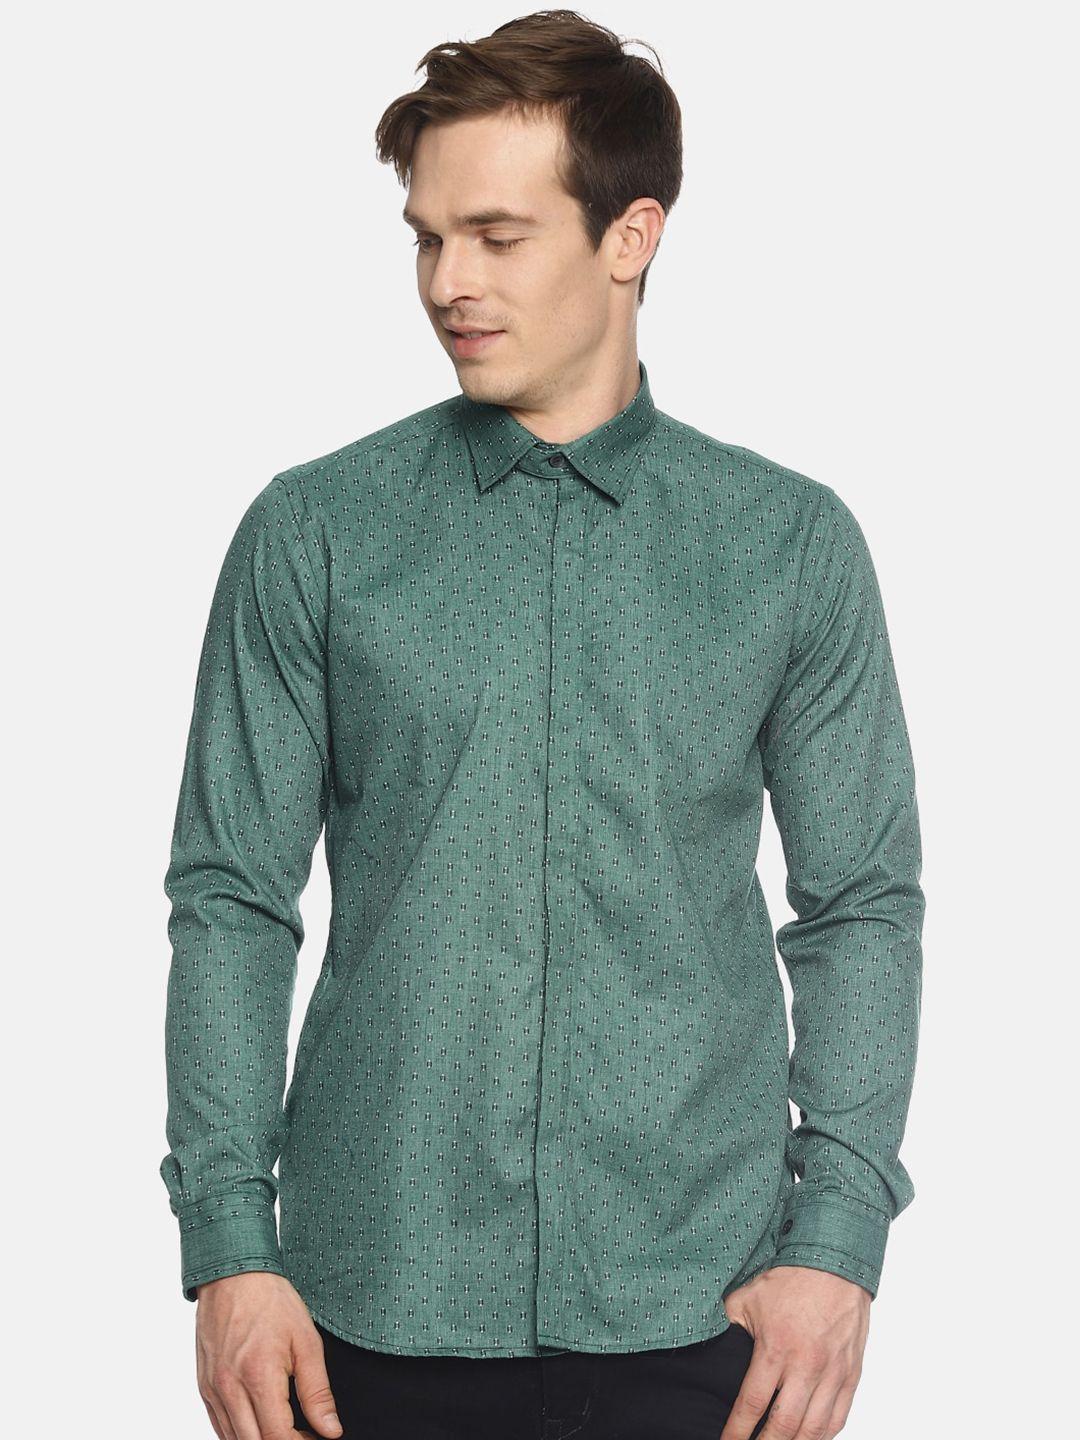 couper & coll men green premium slim fit floral printed pure cotton casual shirt